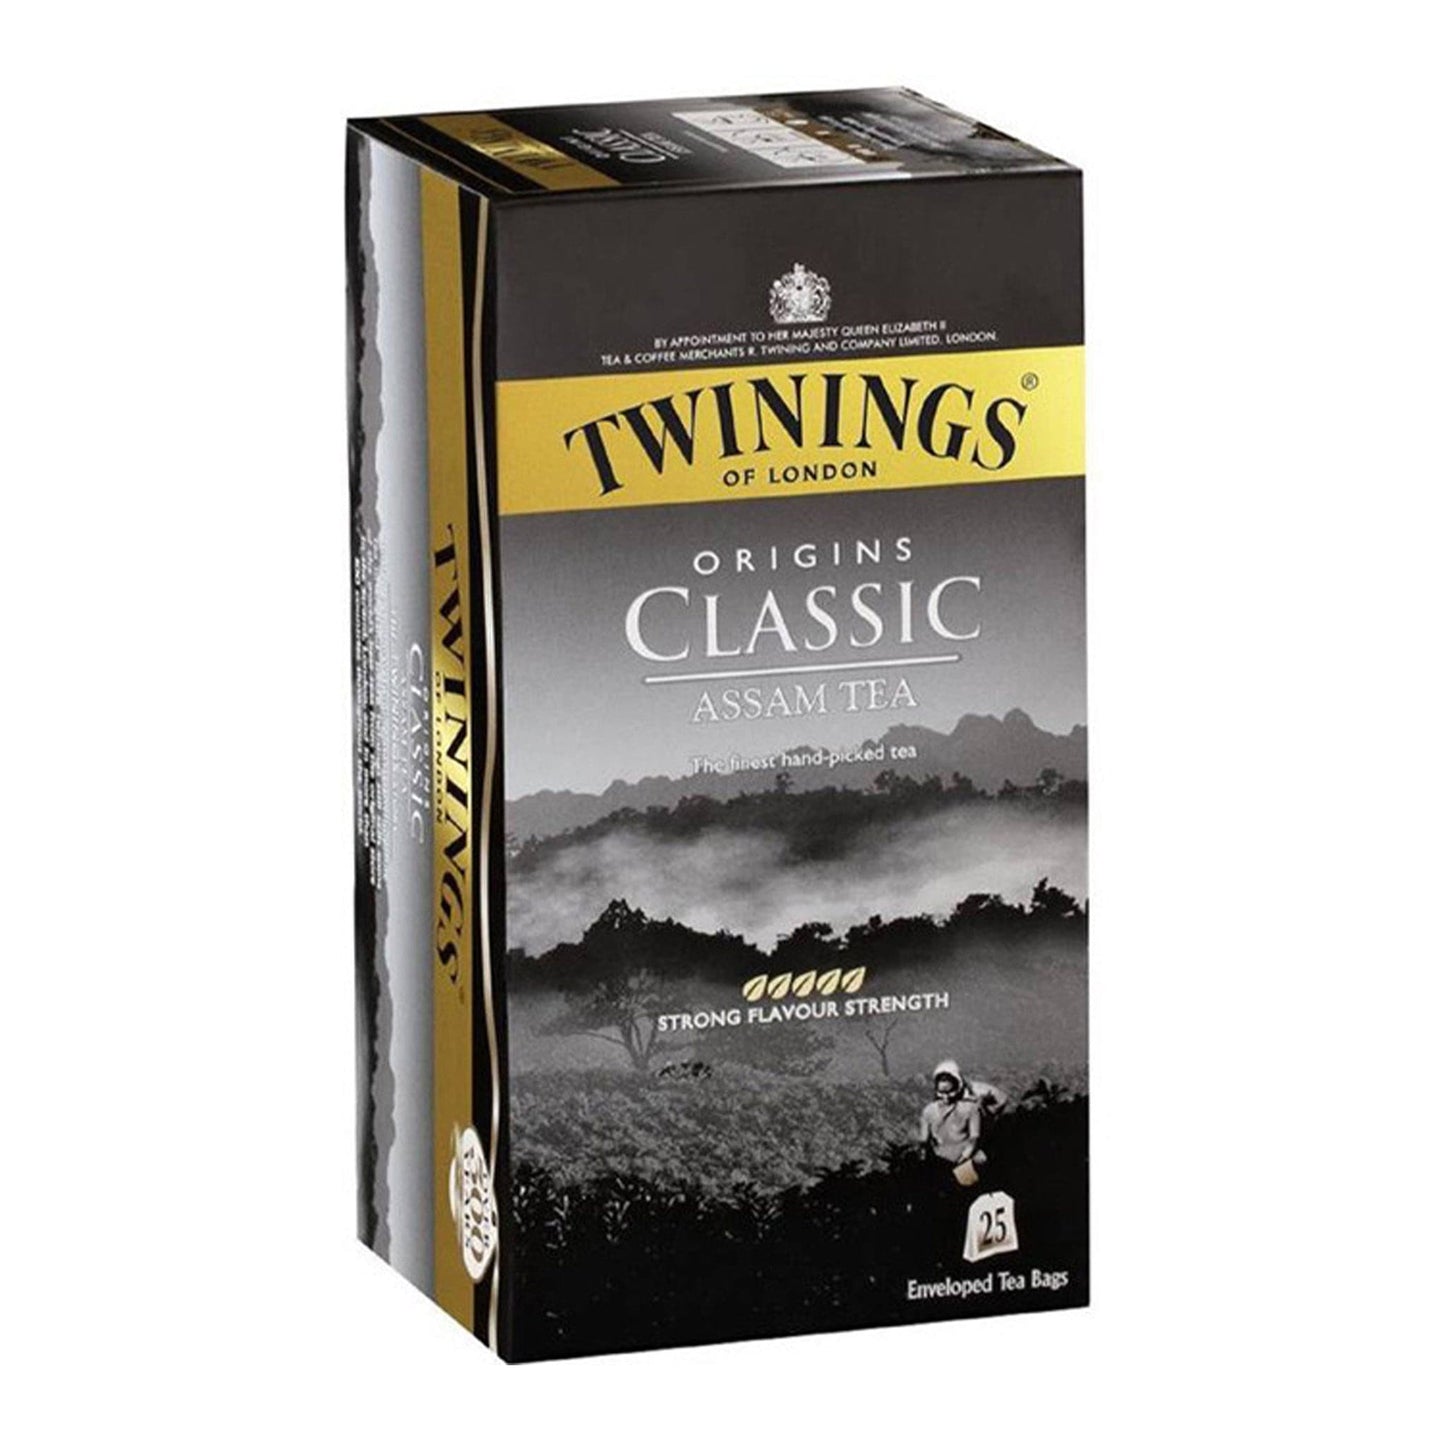 Twinings Origins Assam Tea.